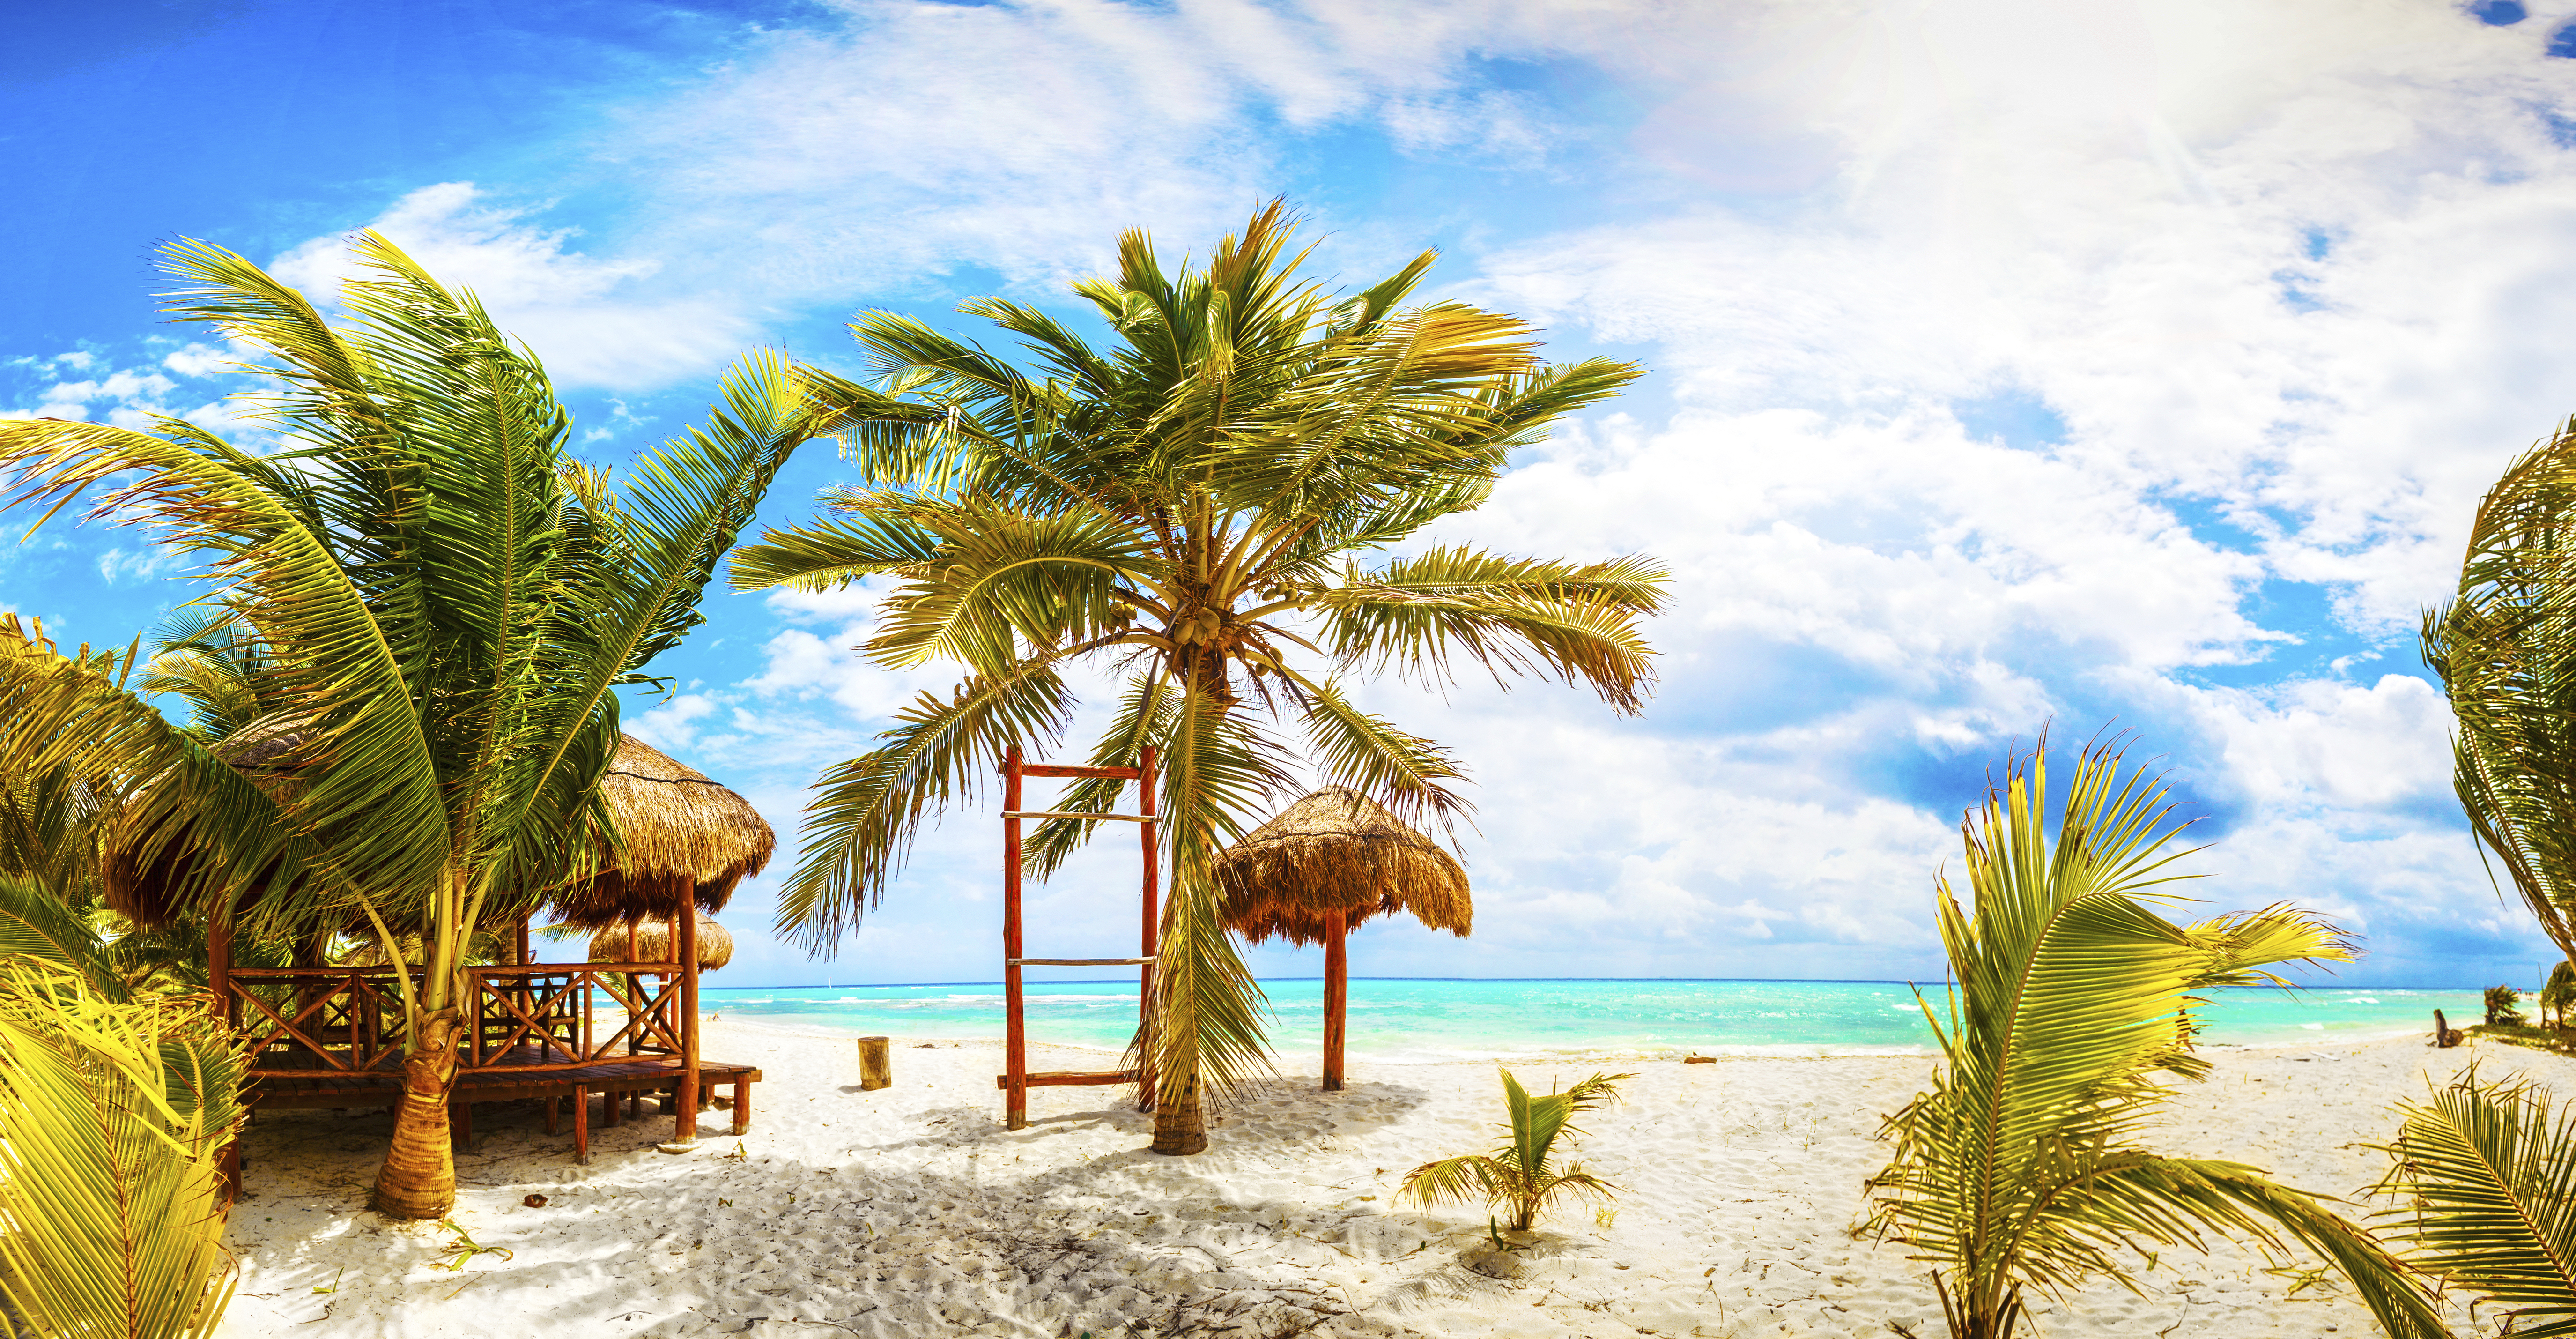 ?¿Qué empacar para ir a Cancún? | Skyscanner Español